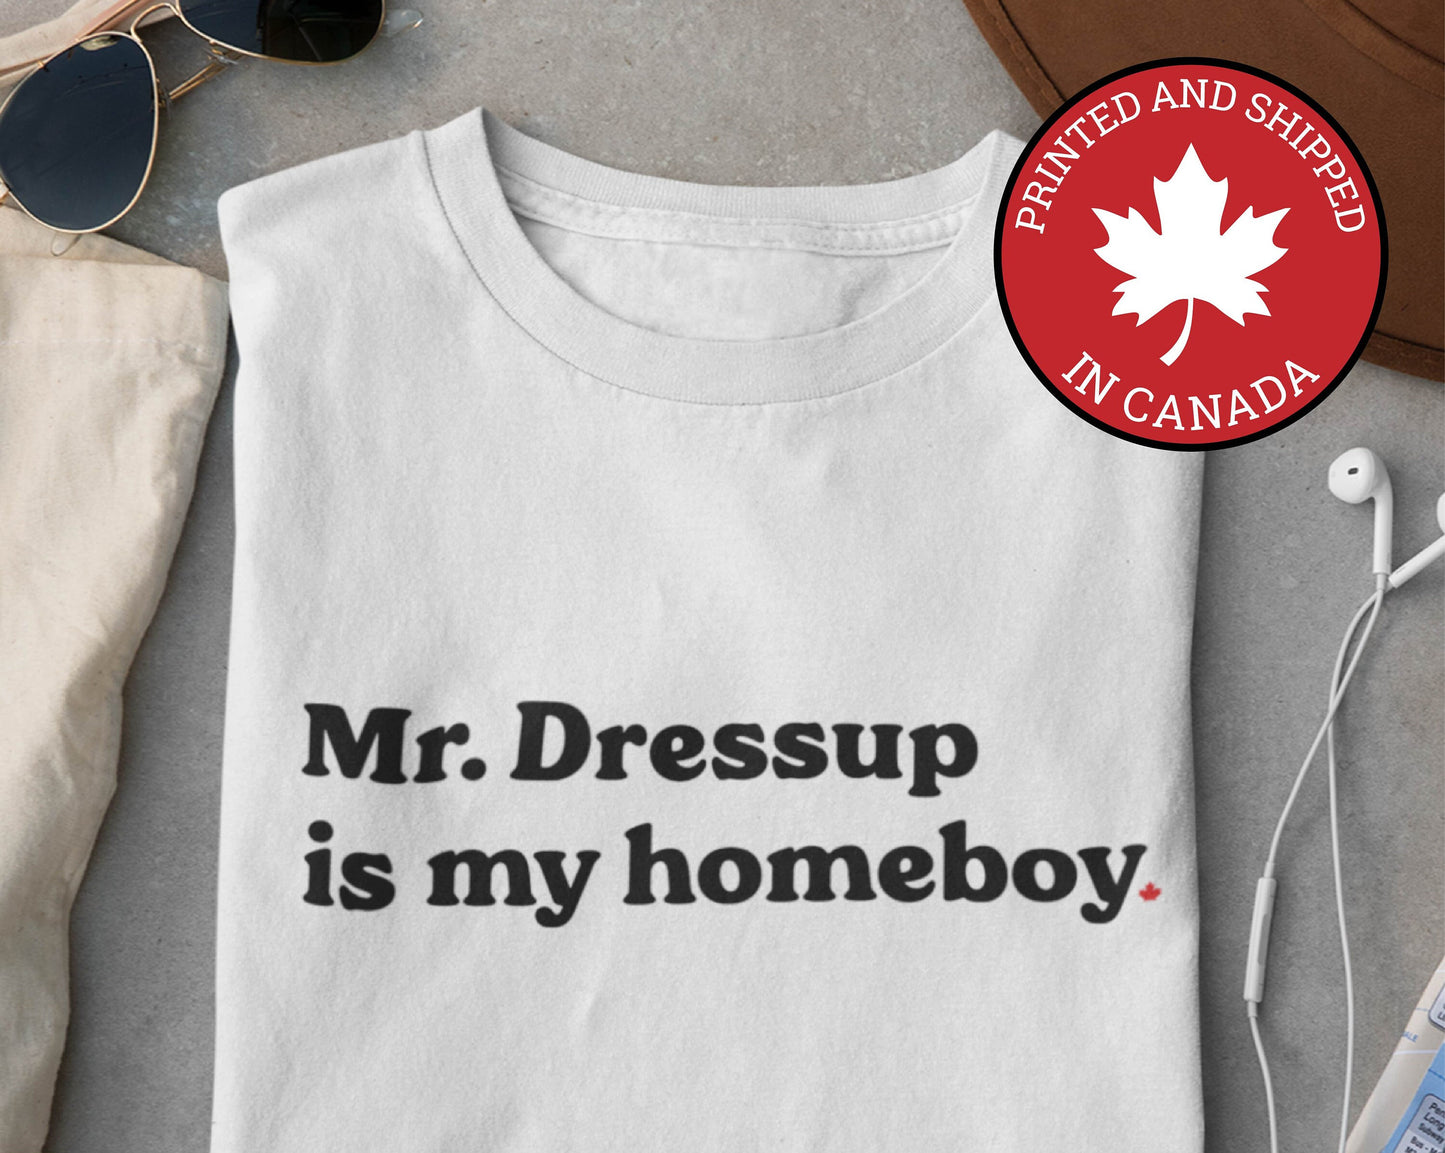 Mr. Dressup Homeboy T-Shirt